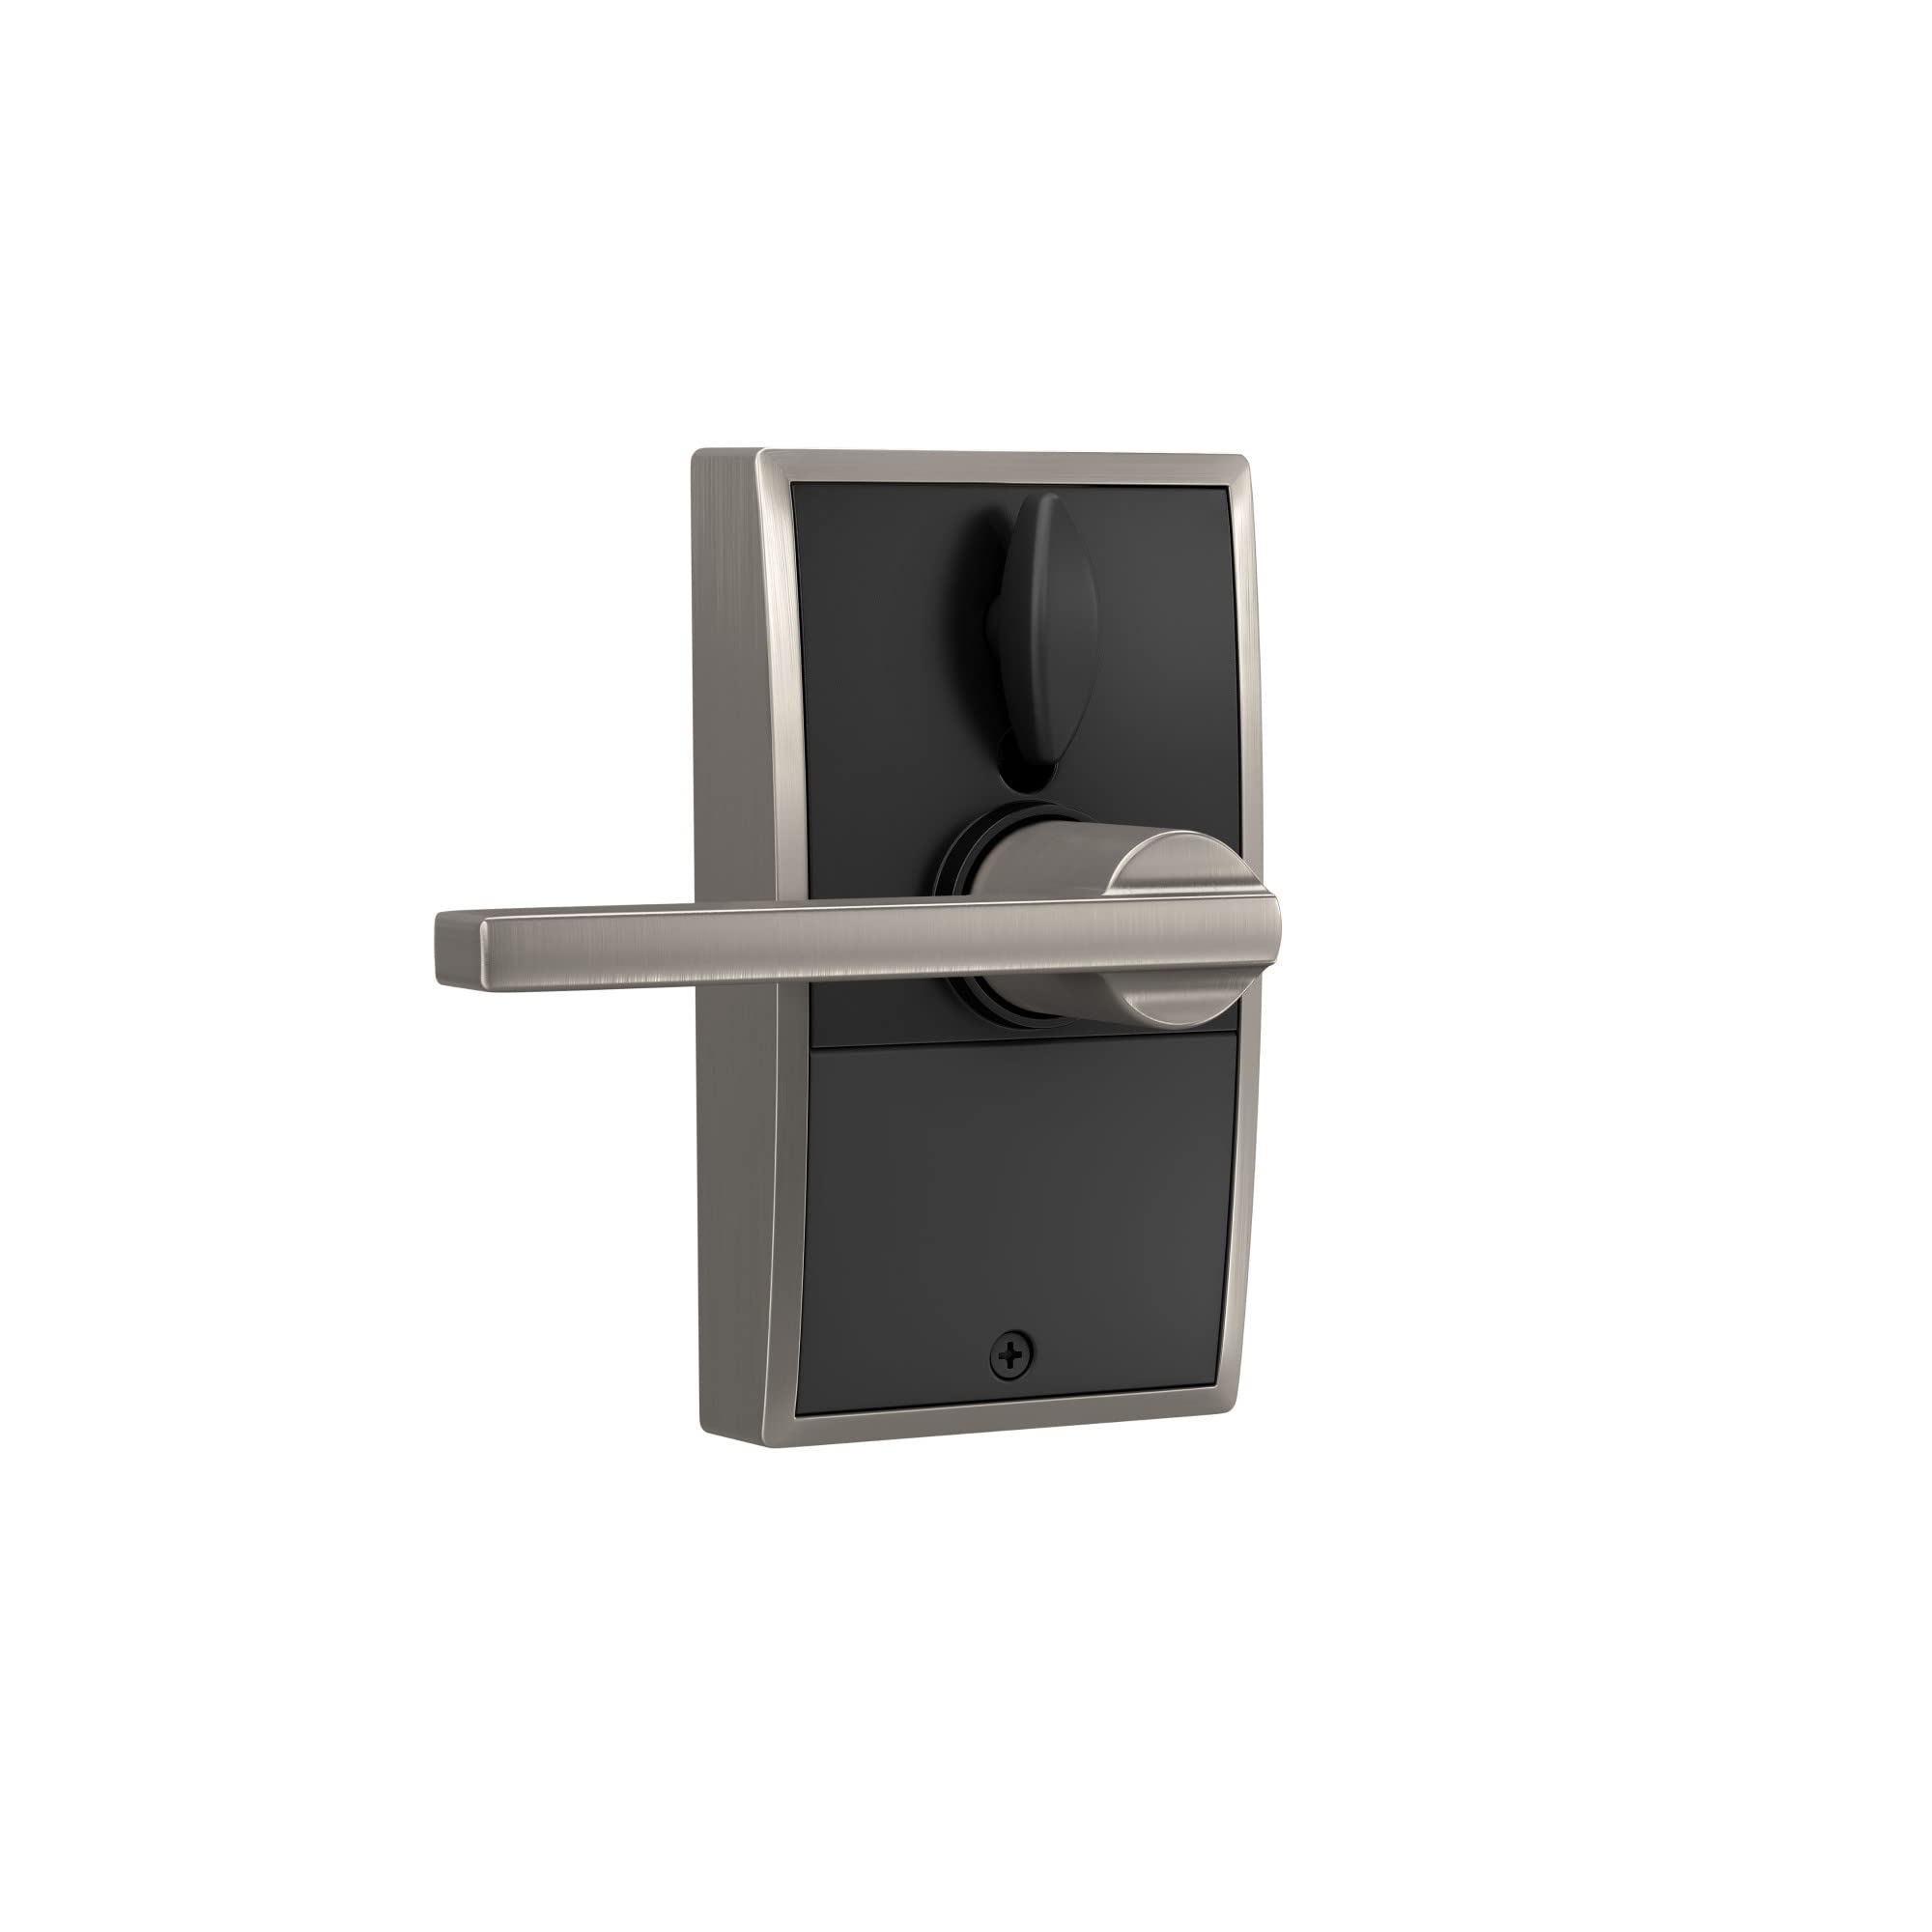 Schlage FE695 CEN 619 LAT Touch Century Lock with Latitude Lever, Electronic Keyless Entry Lock, Satin Nickel